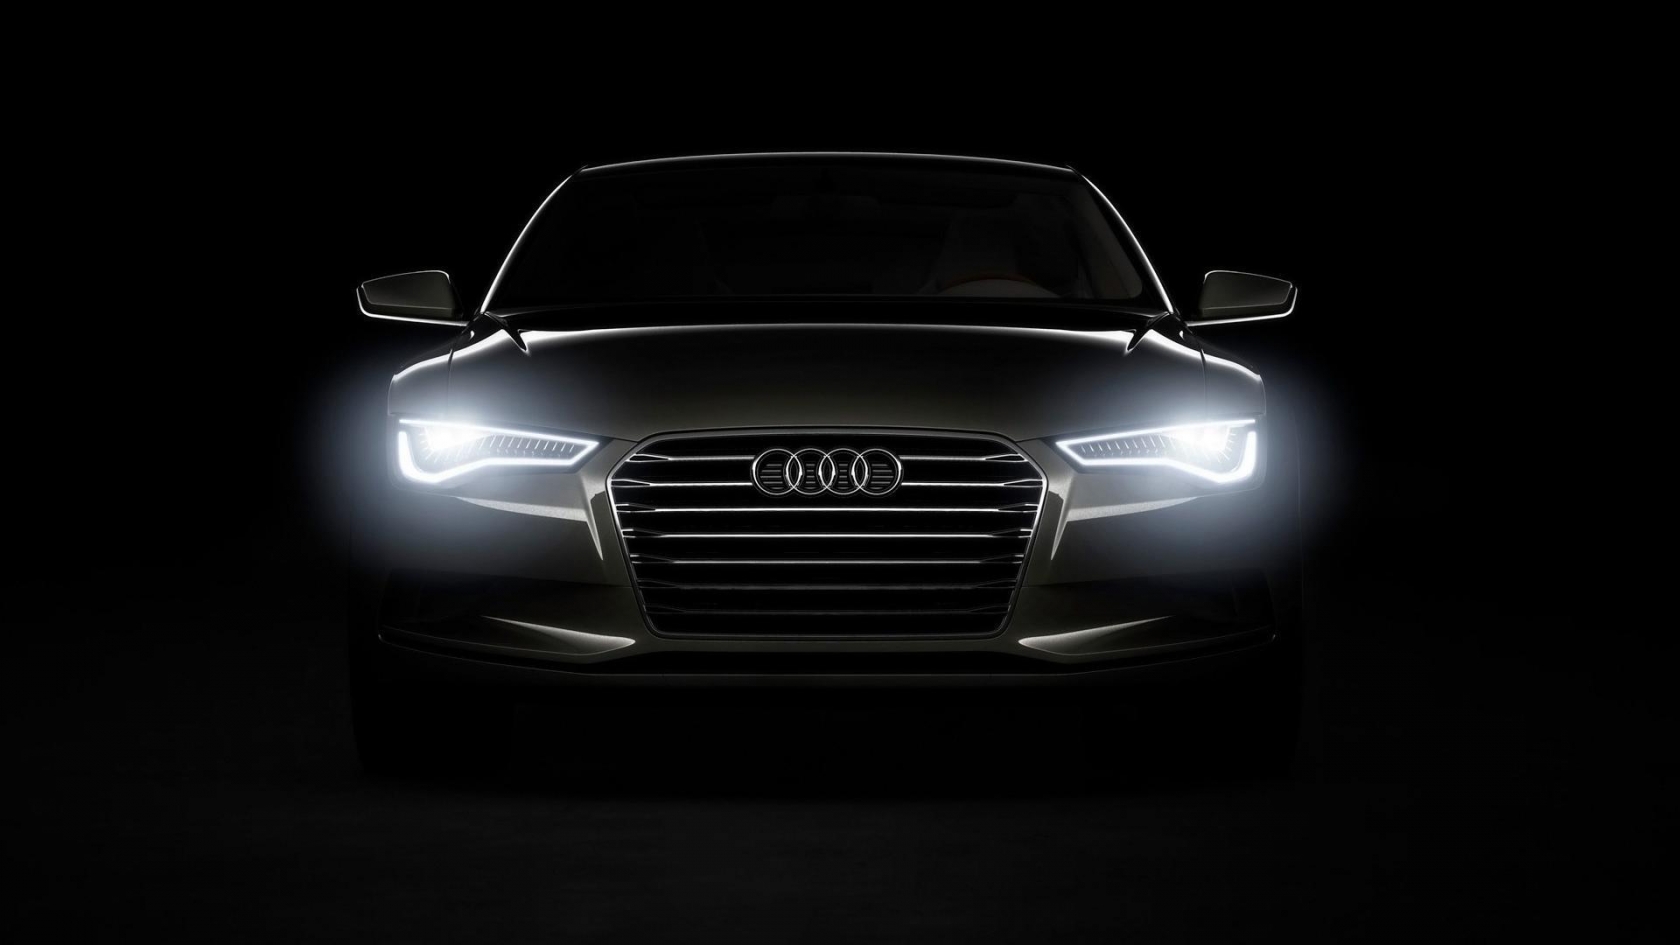 Audi A7 Headlights for 1680 x 945 HDTV resolution